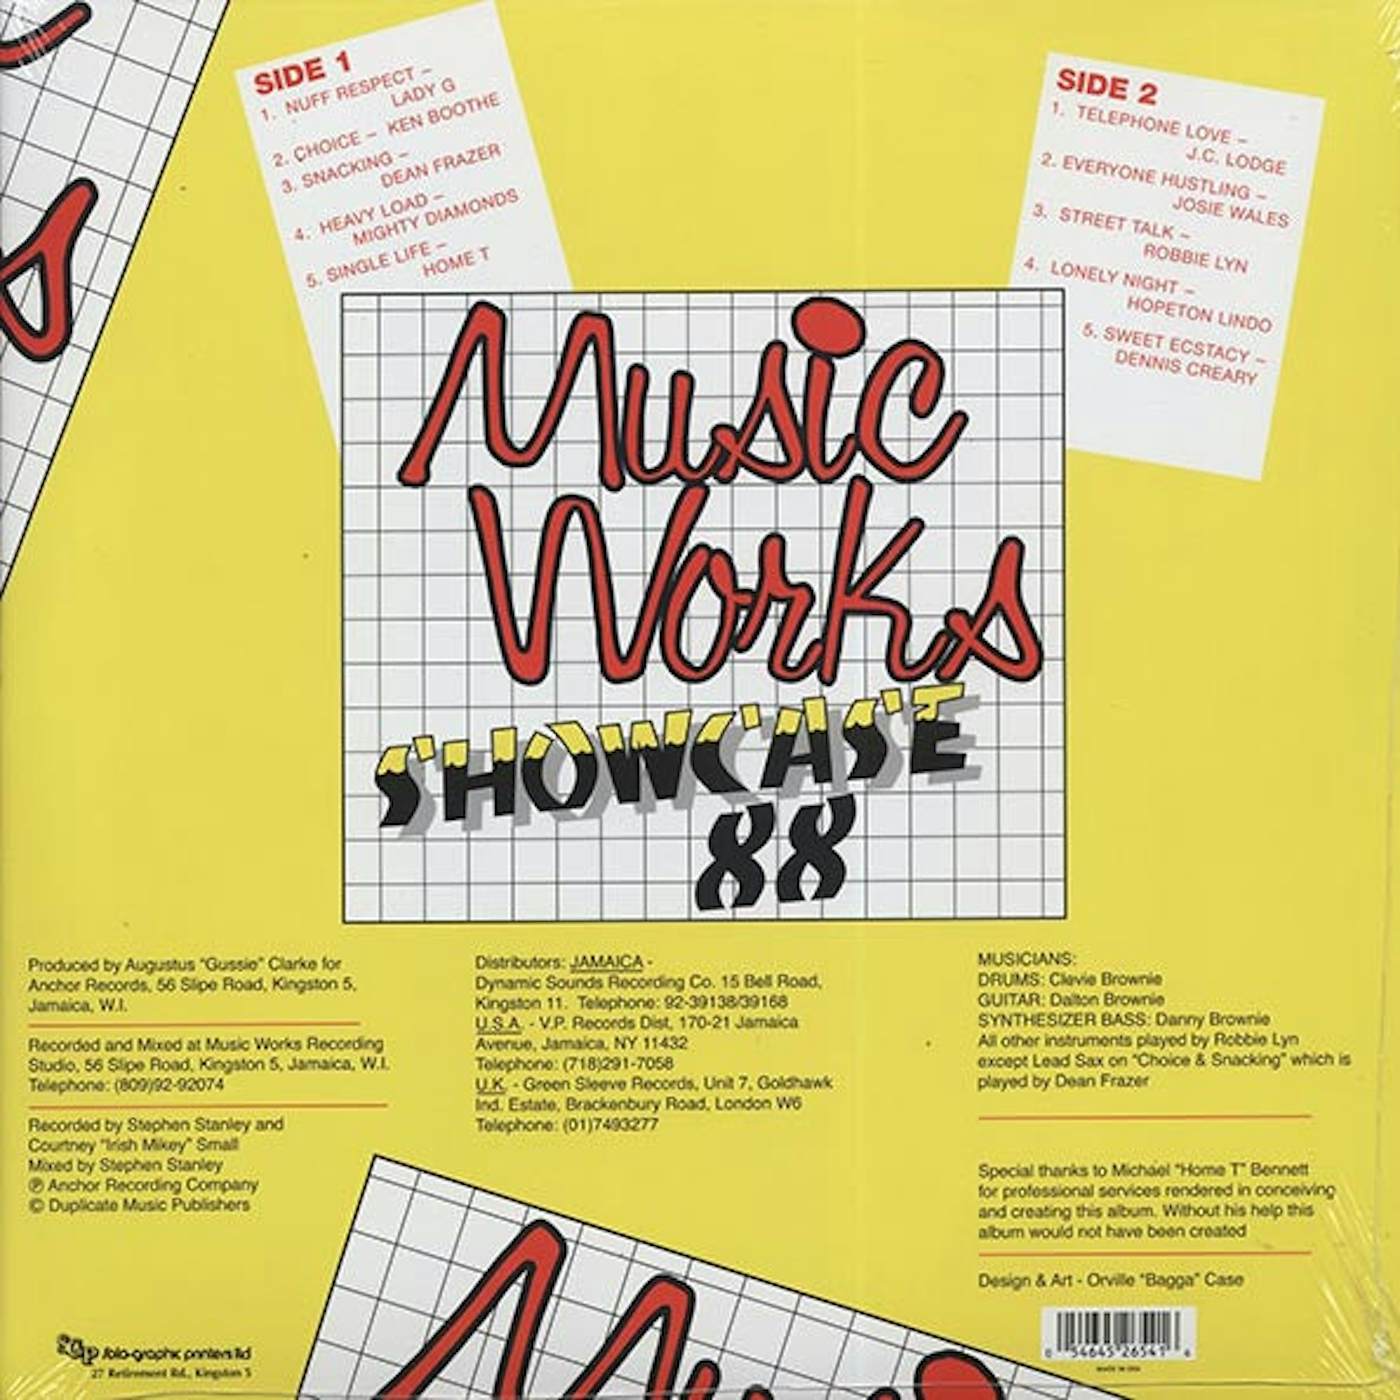 Lady G, Josey Wales, The Mighty Diamonds, Home T, JC Lodge, Etc.  LP -  Music Works Showcase 88 (Telephone Love Rhythm) (ltd. ed.) (colored vinyl)